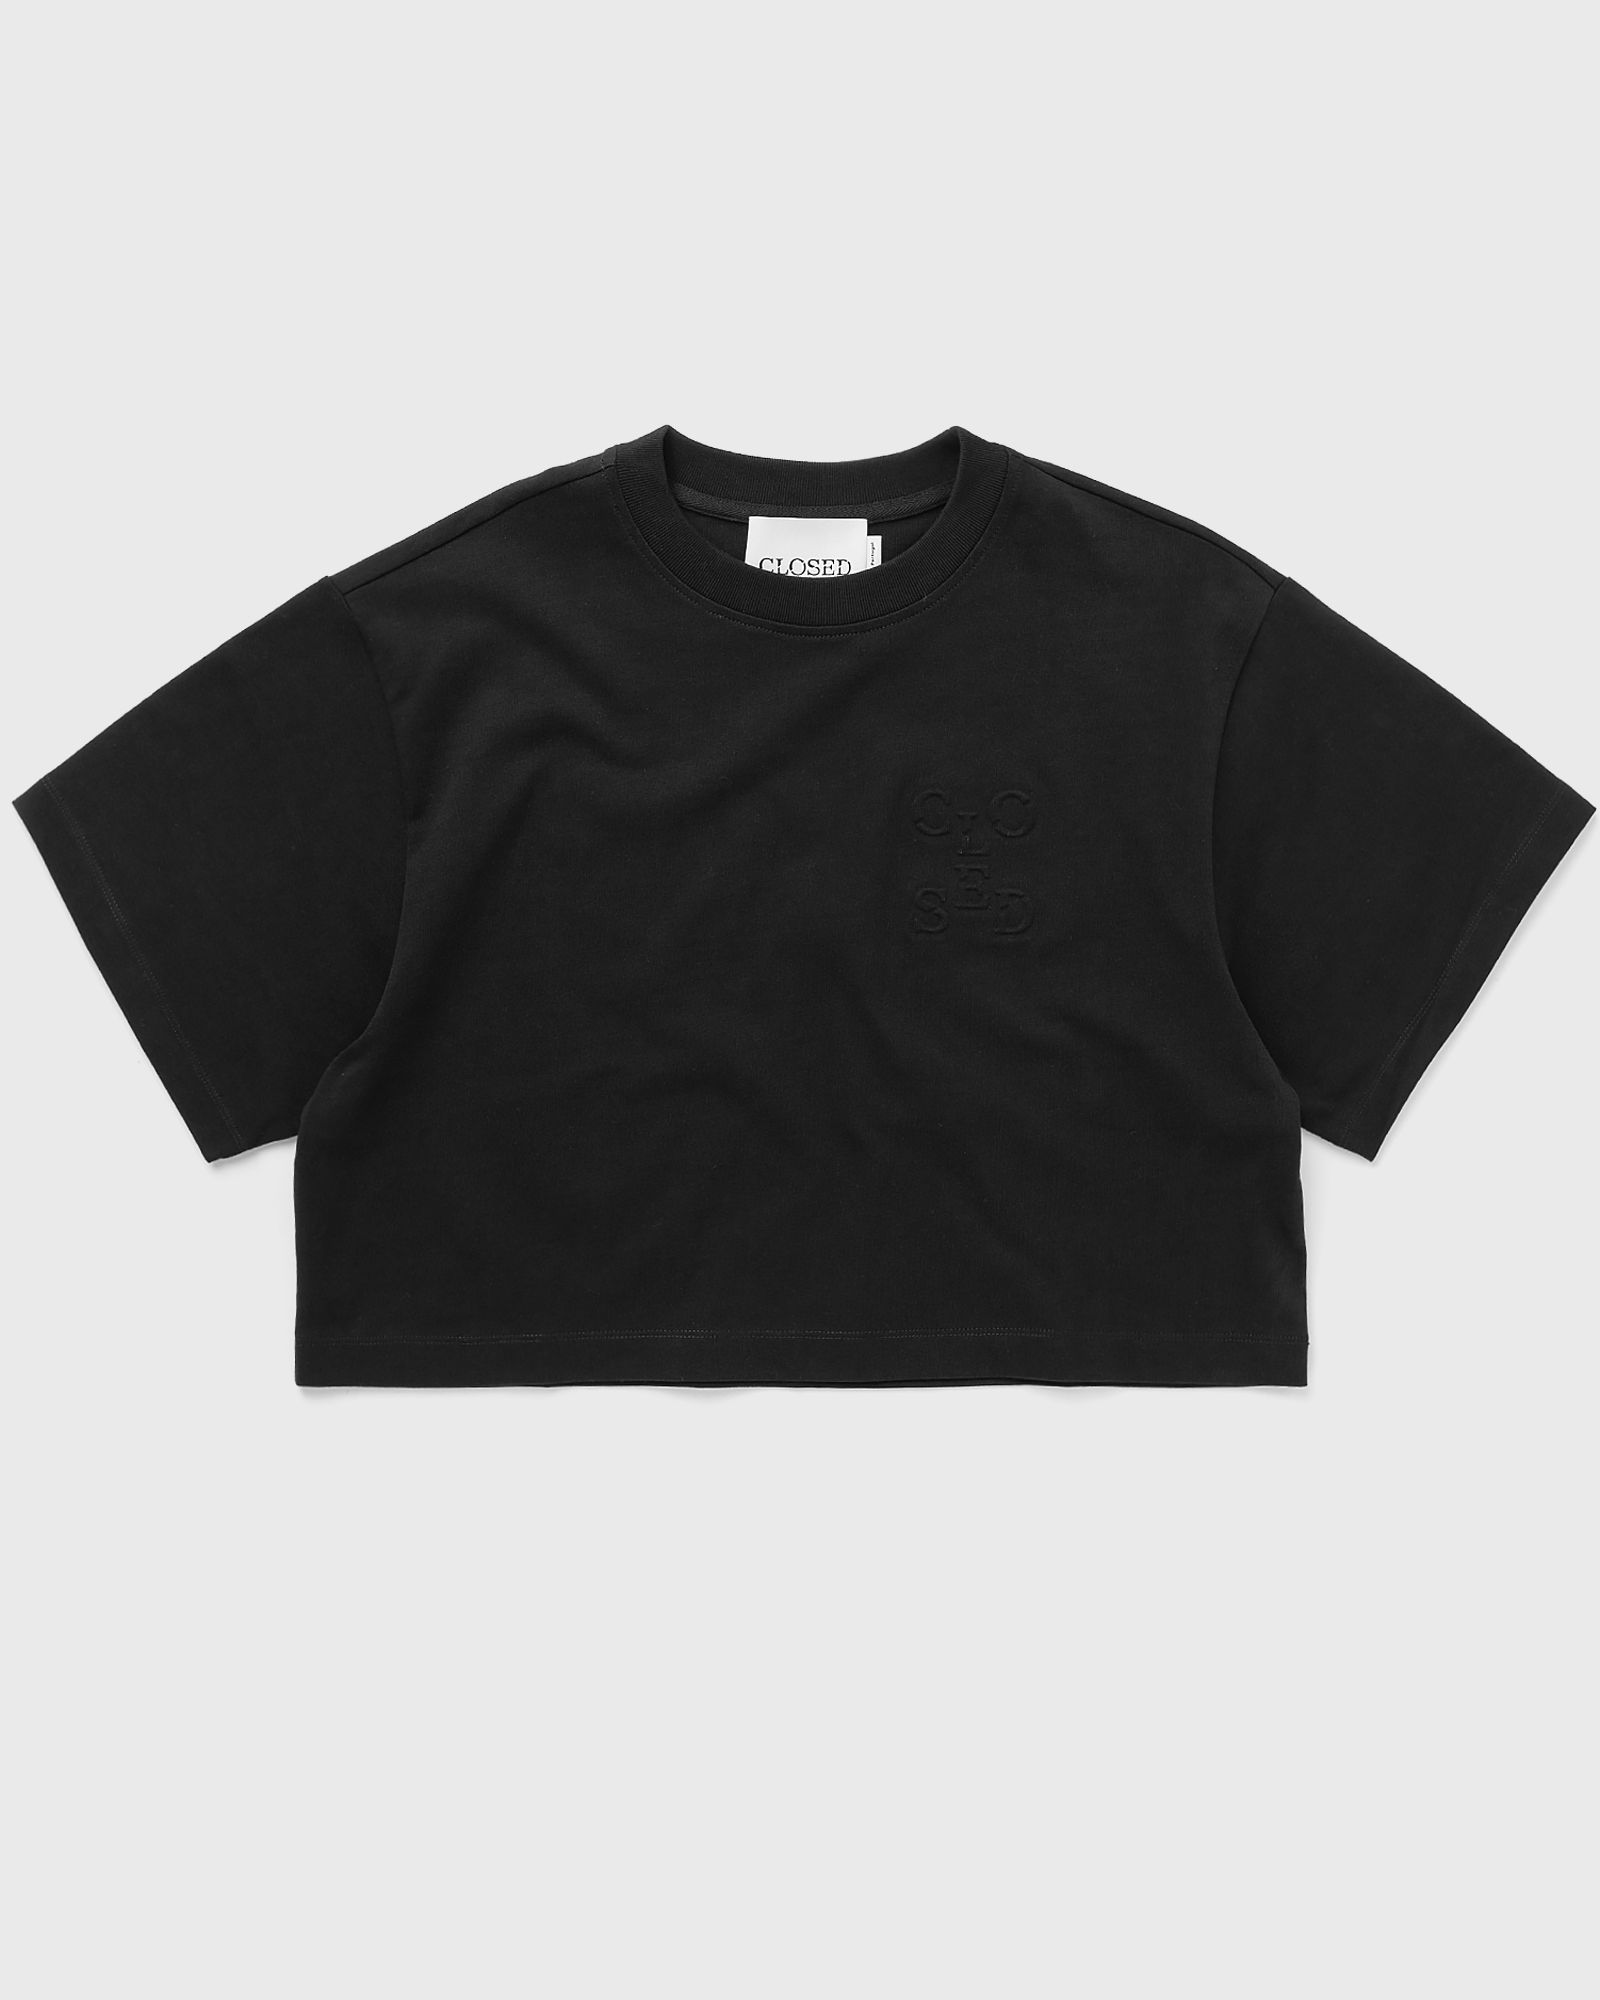 CLOSED - croppped t-shirt women shortsleeves black in größe:l